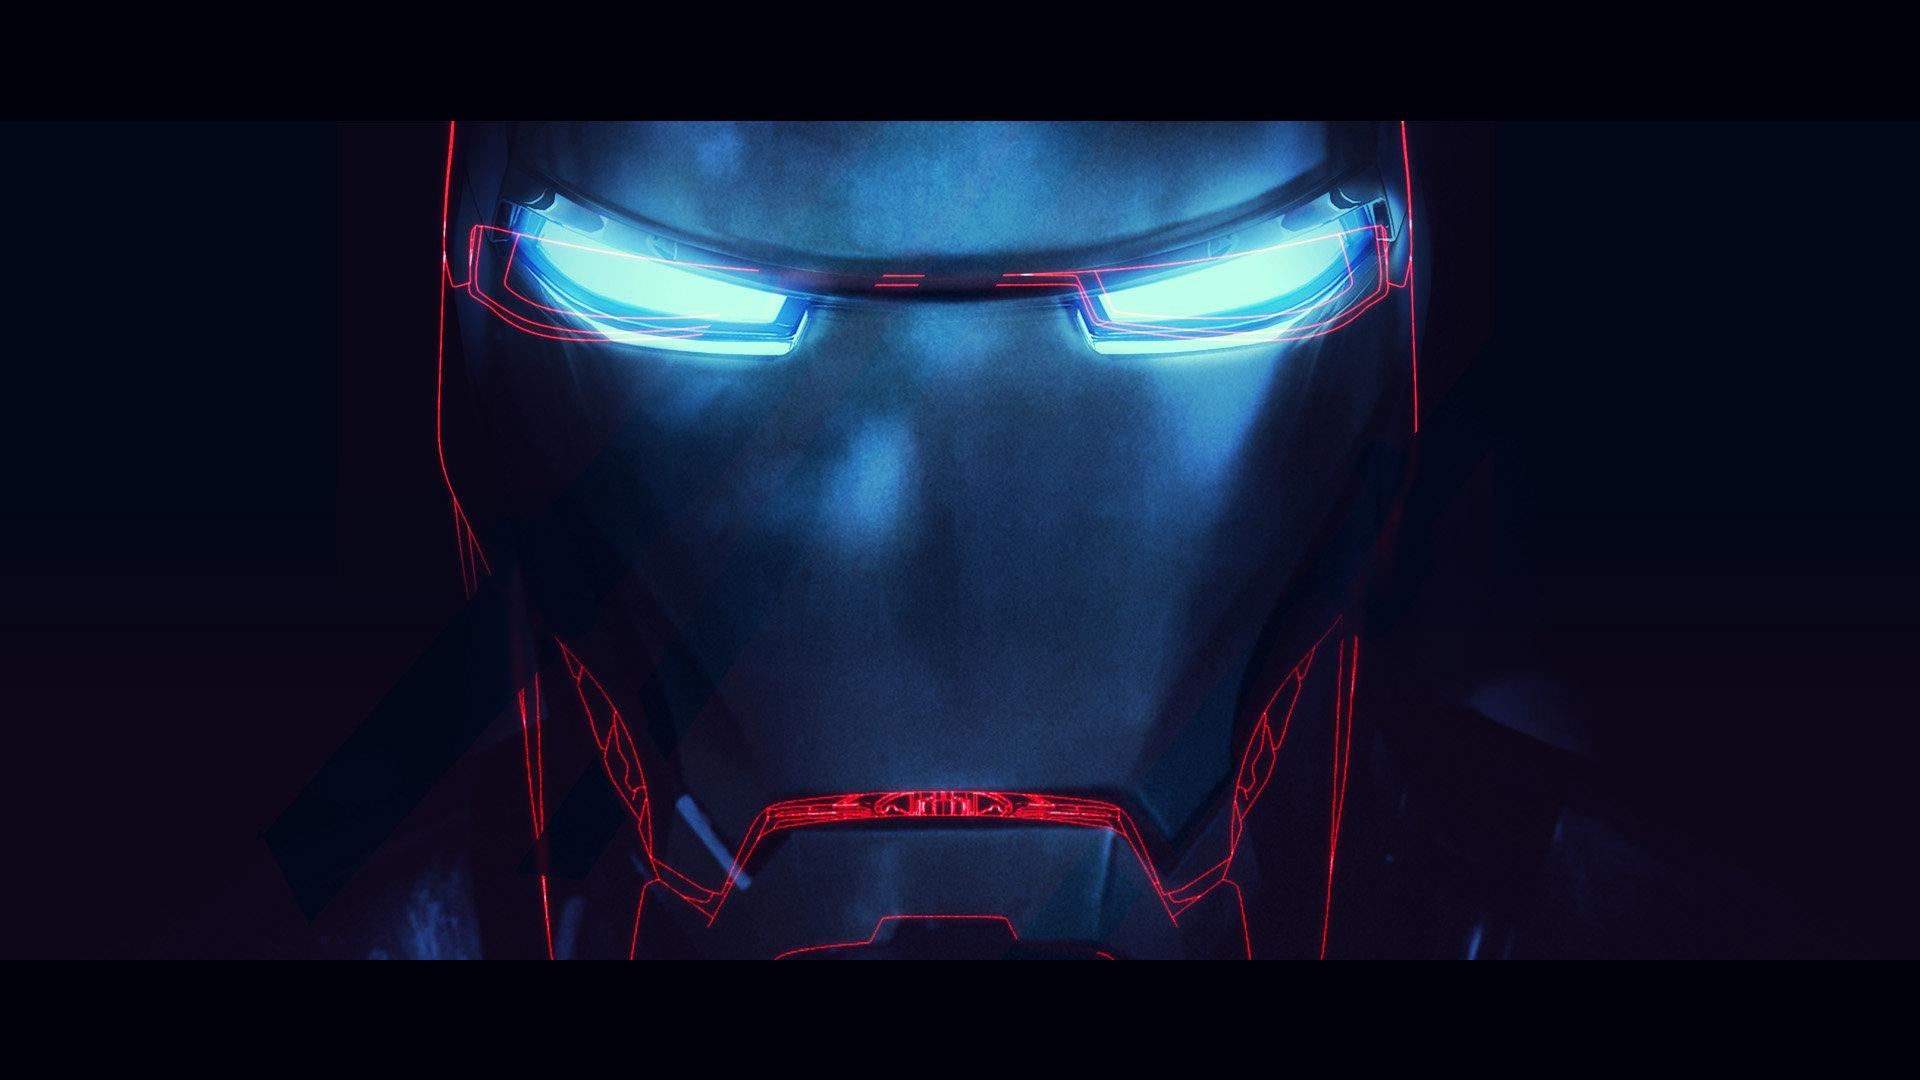 Iron Man 3 wallpaper HD for desktop background